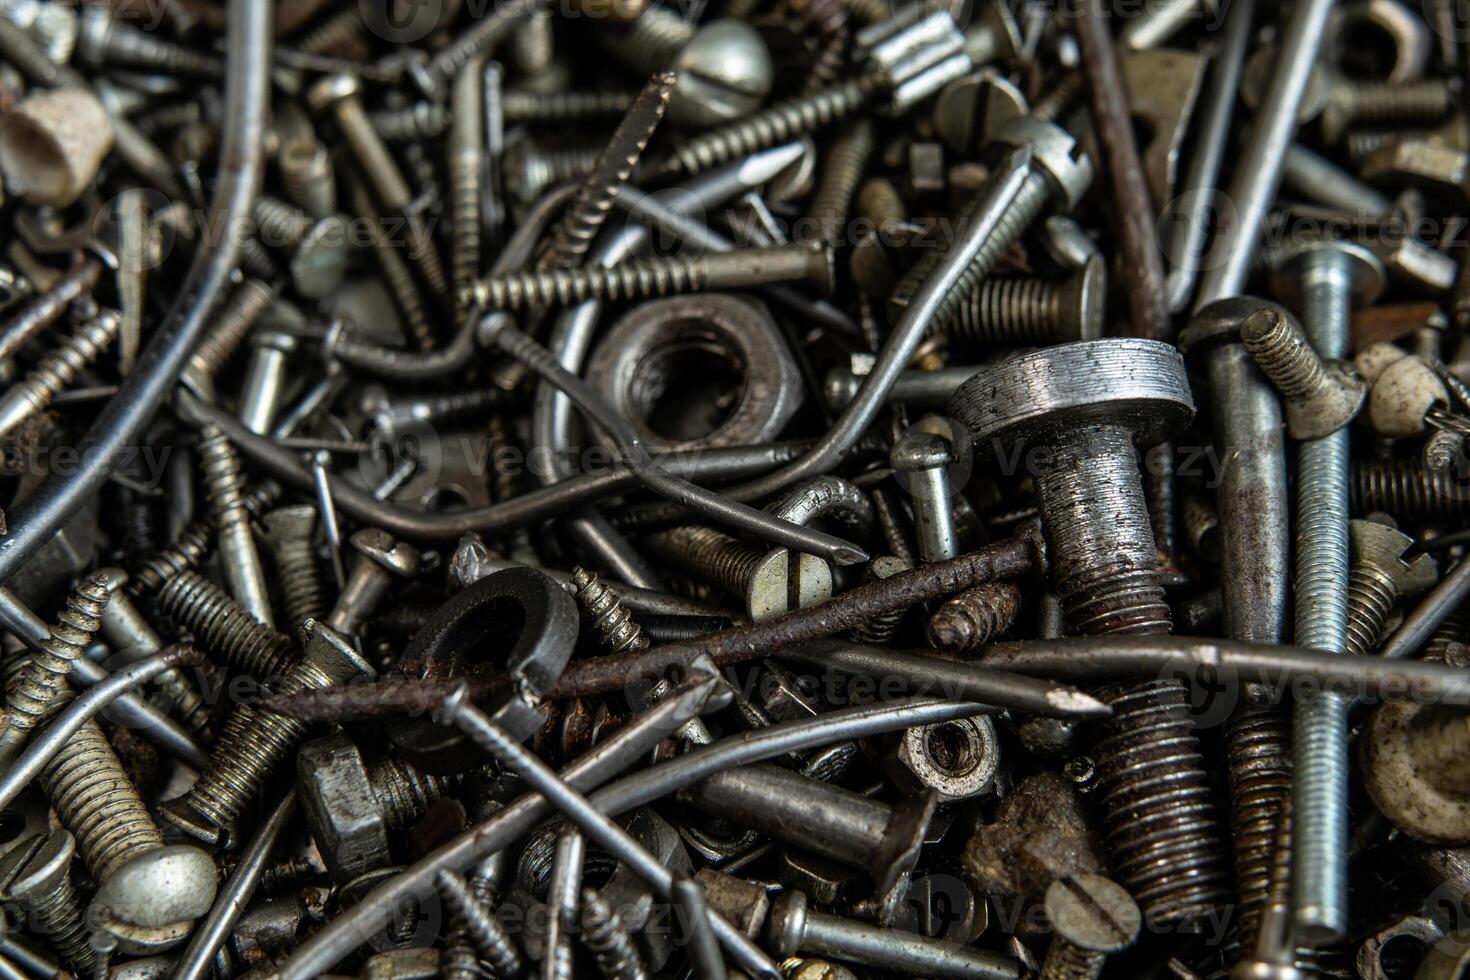 Range Rusty old screws bolts nuts. Grunge metal Hardware details photo